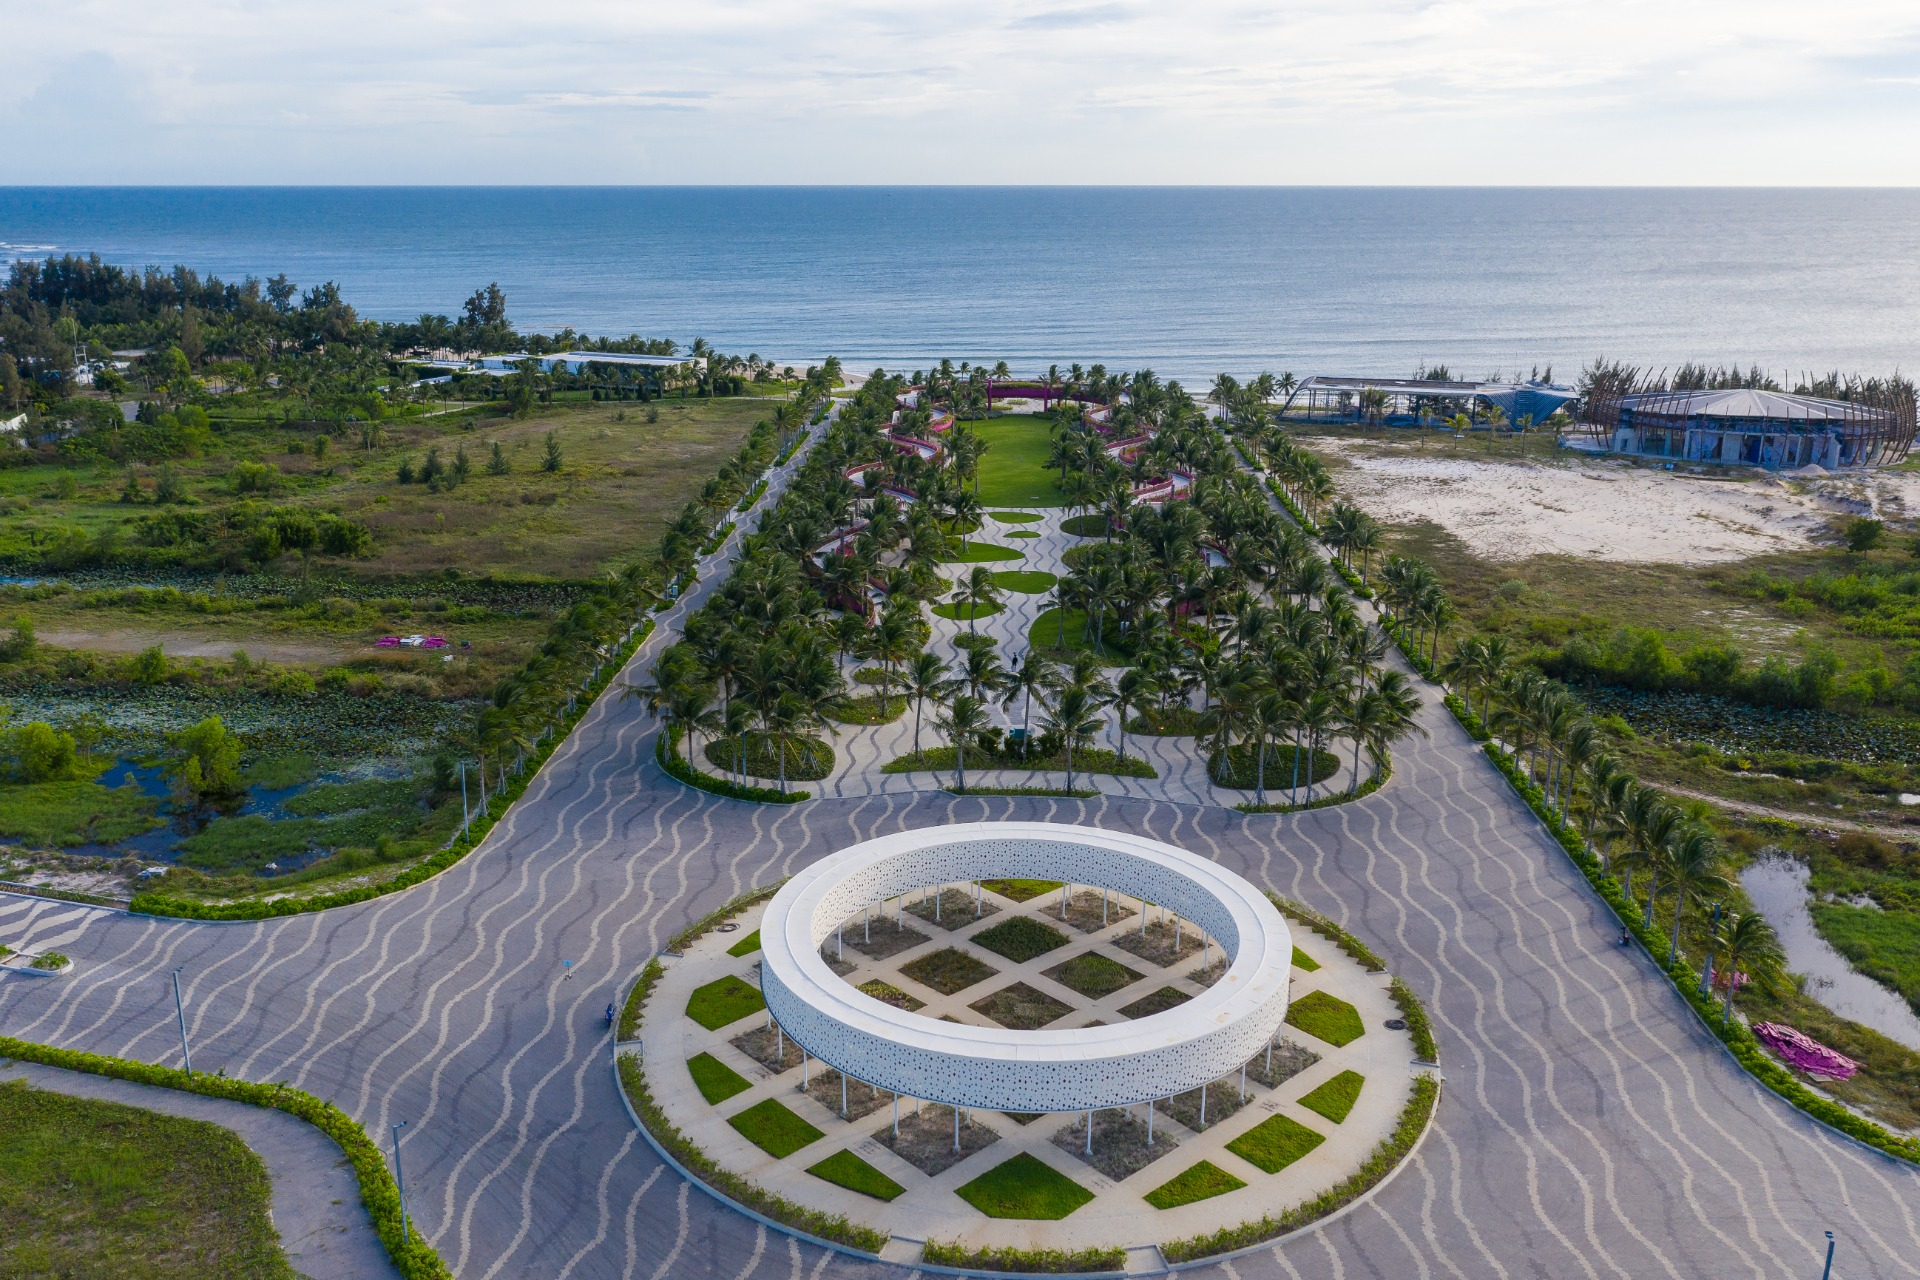 Architettura sostenibile: il Thanh Long Baywalk in Vietnam